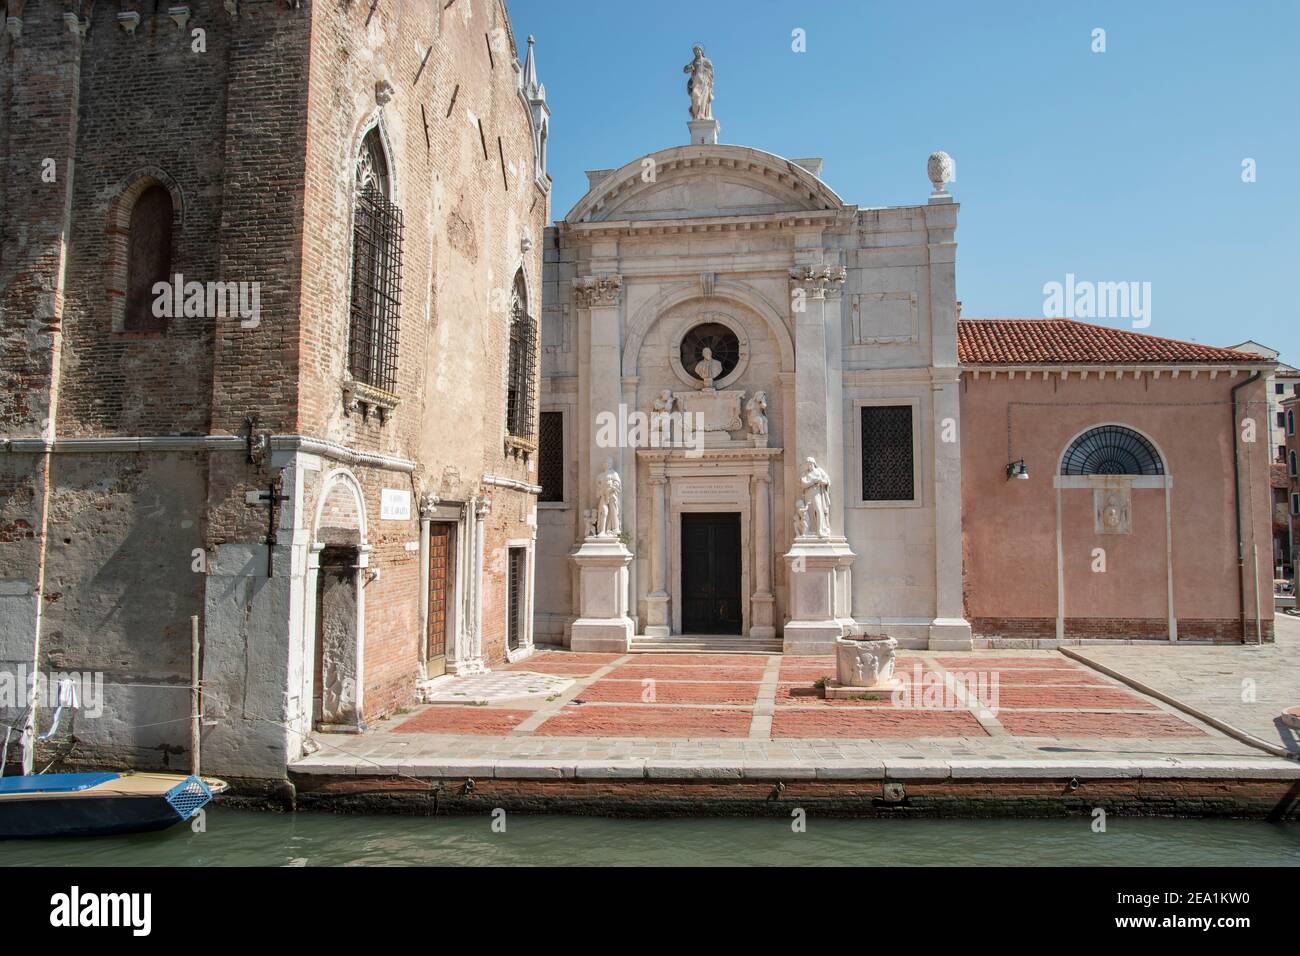 The church of the Abbey of Misericordia, city of Venice, Italy, Europe Stock Photo